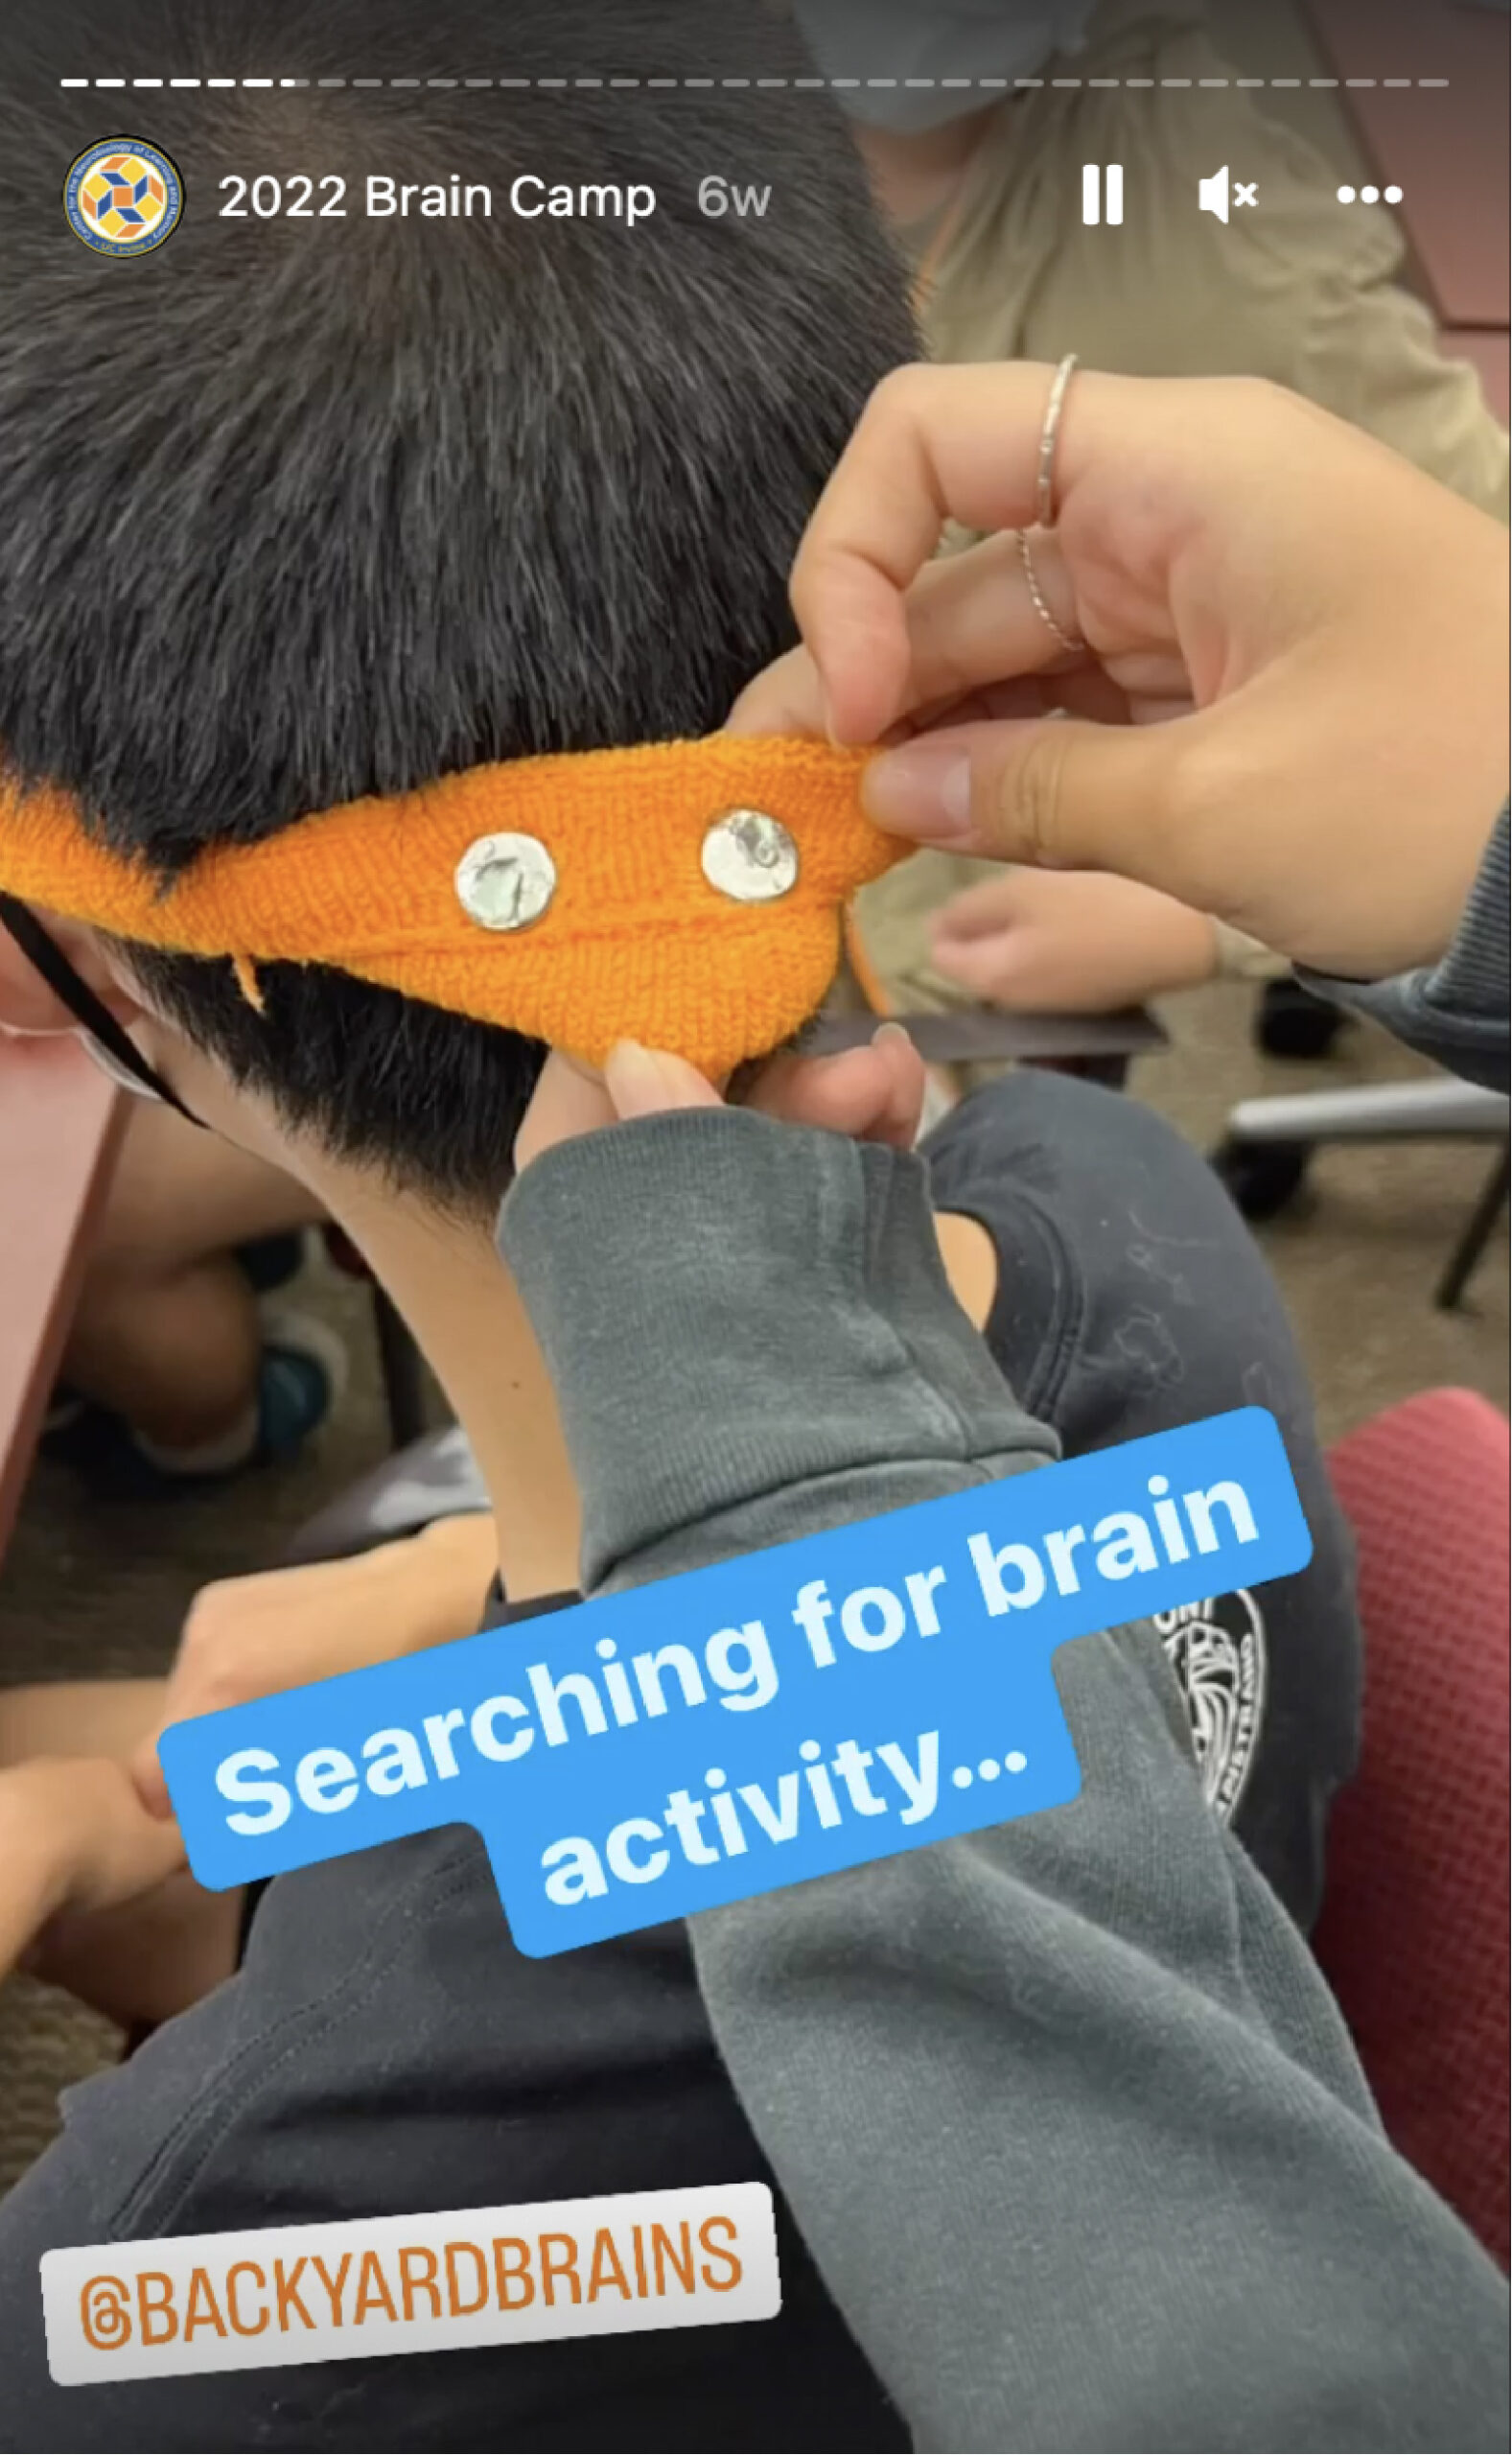 UCI Brain Camp Student measuring brain activity